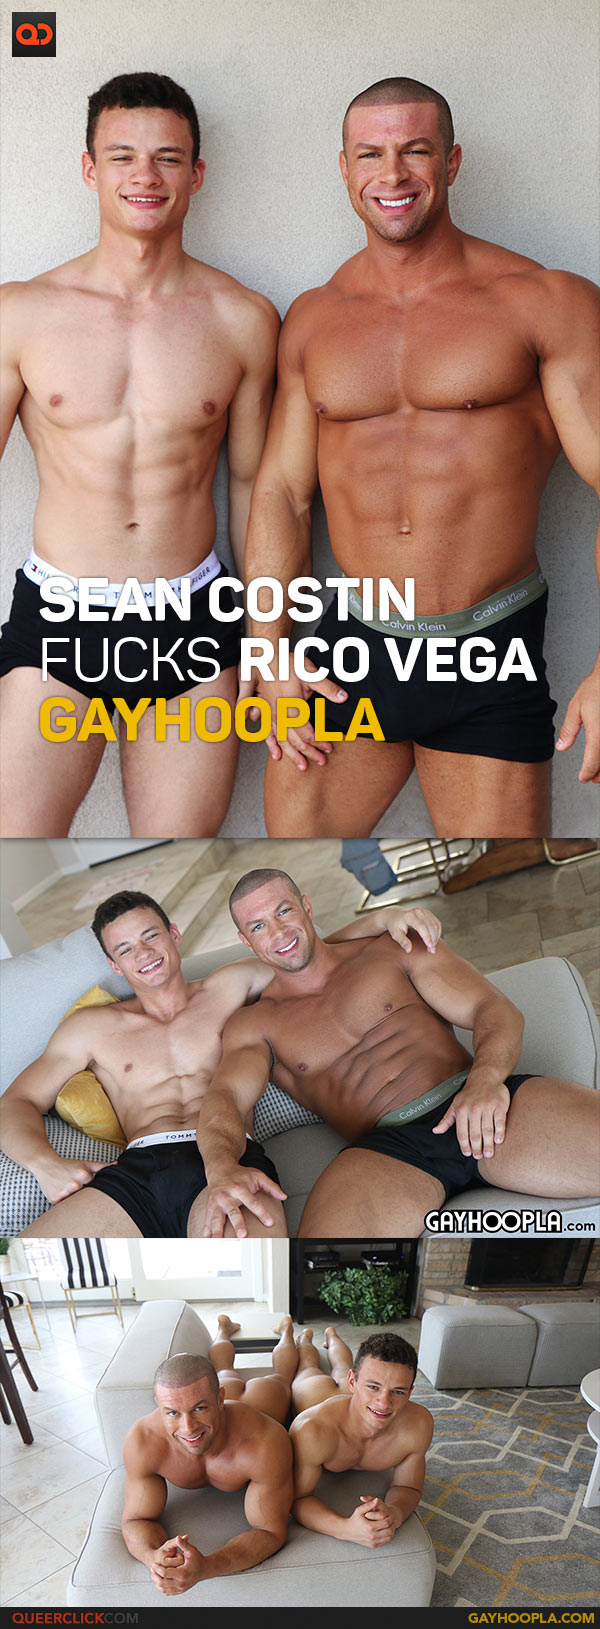 GayHoopla: Sean Costin Fucks Rico Vega